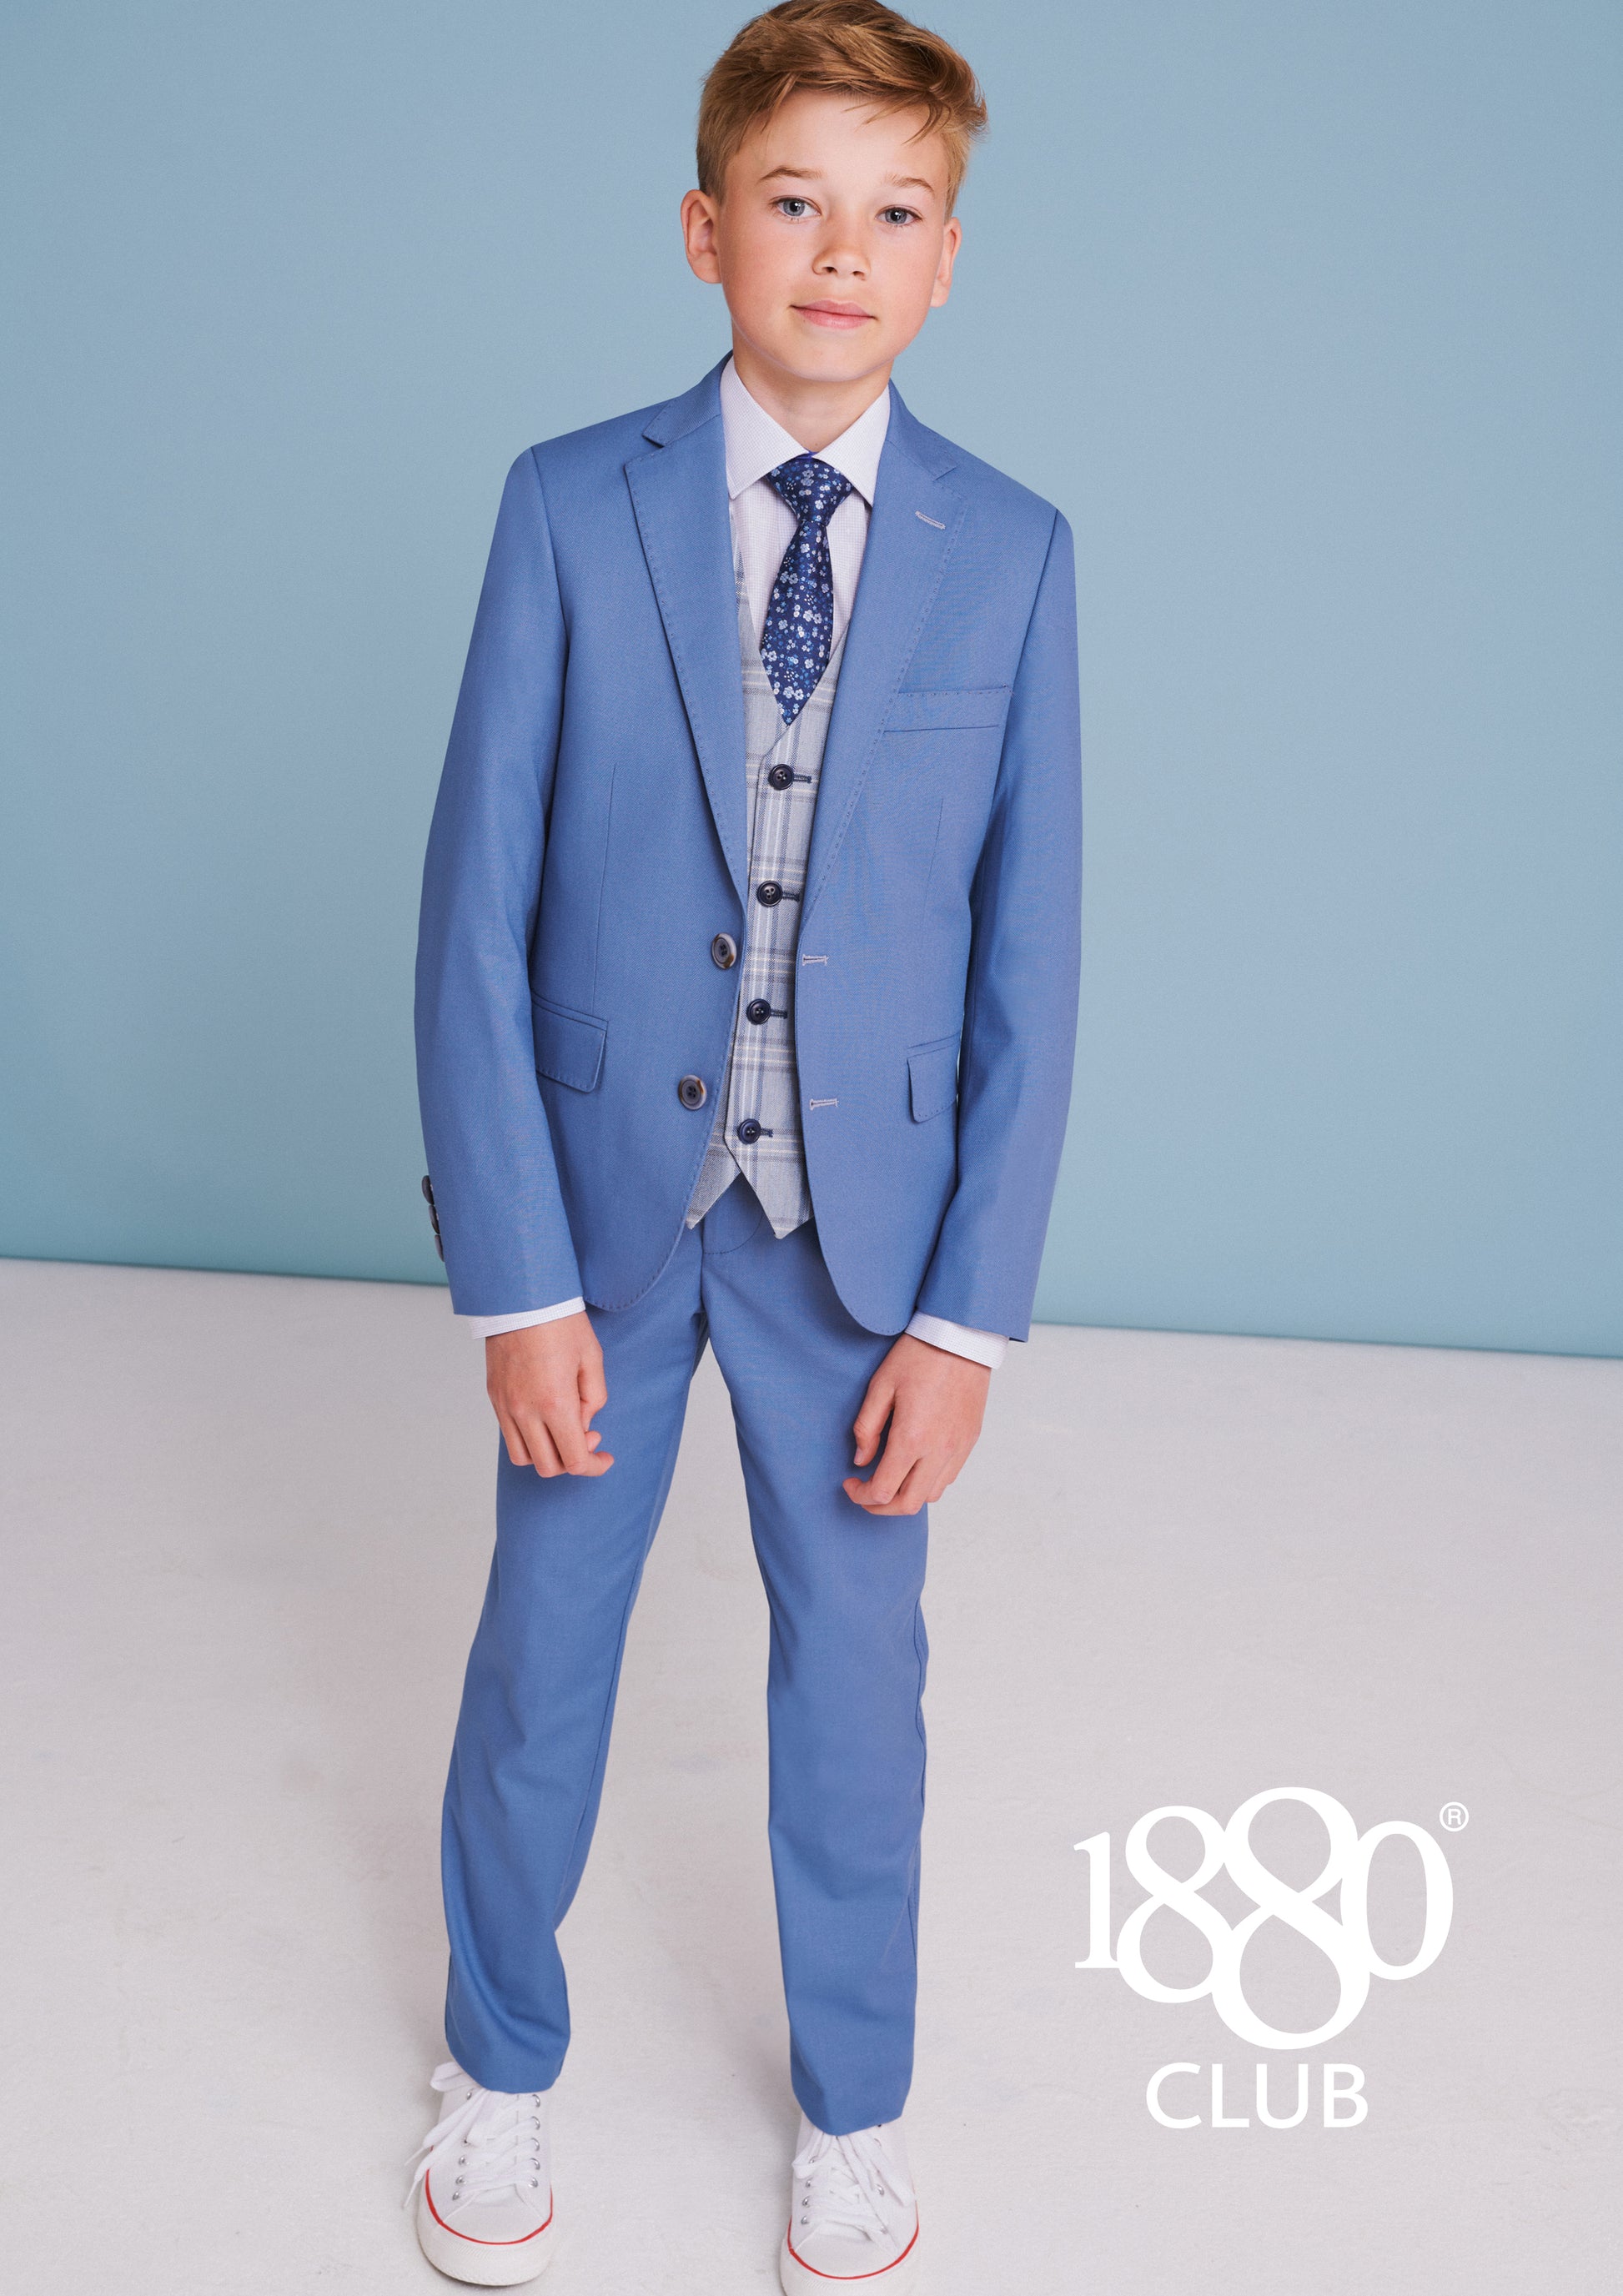 1880 Club Boys Junior Suit Light Blue